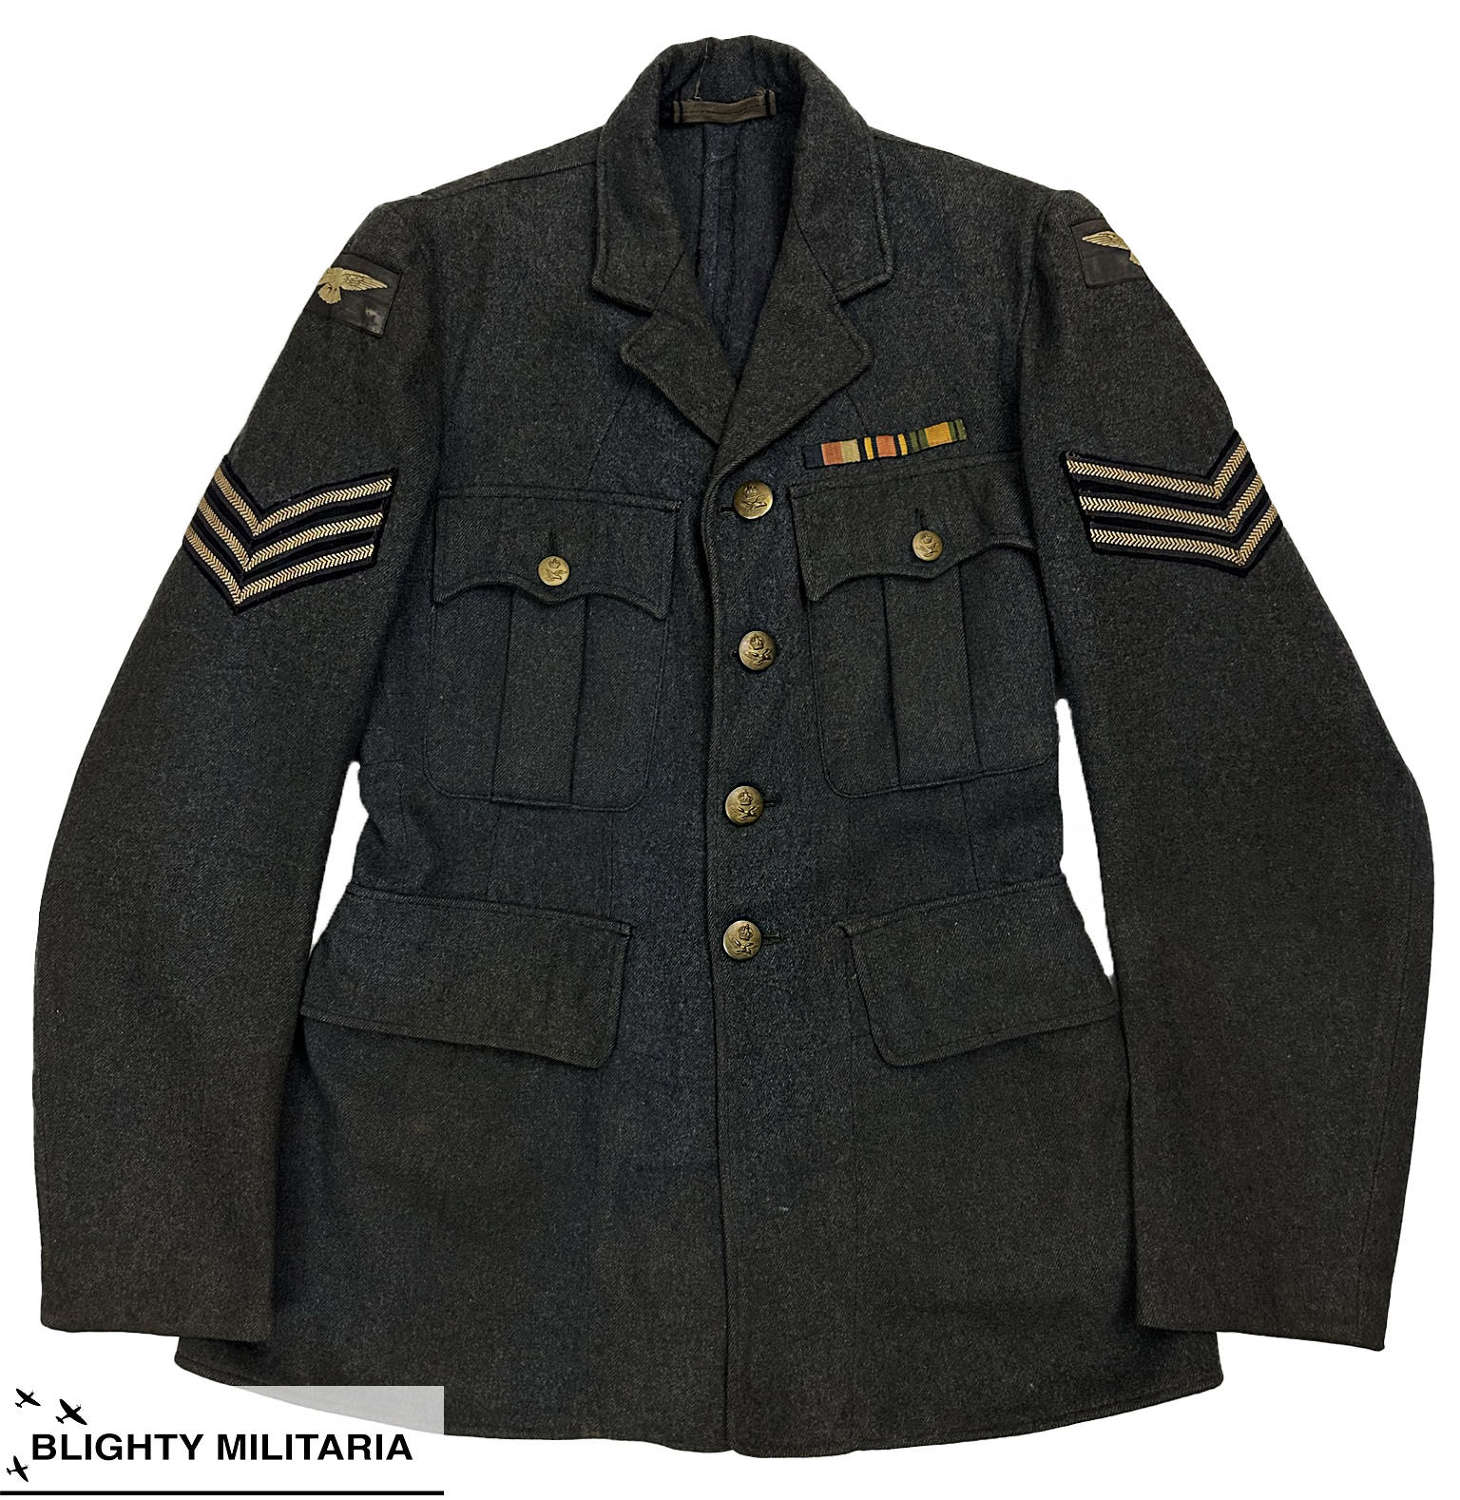 Original WW2 RAF Sergeants Ordinary Airman's Tunic - Attributed